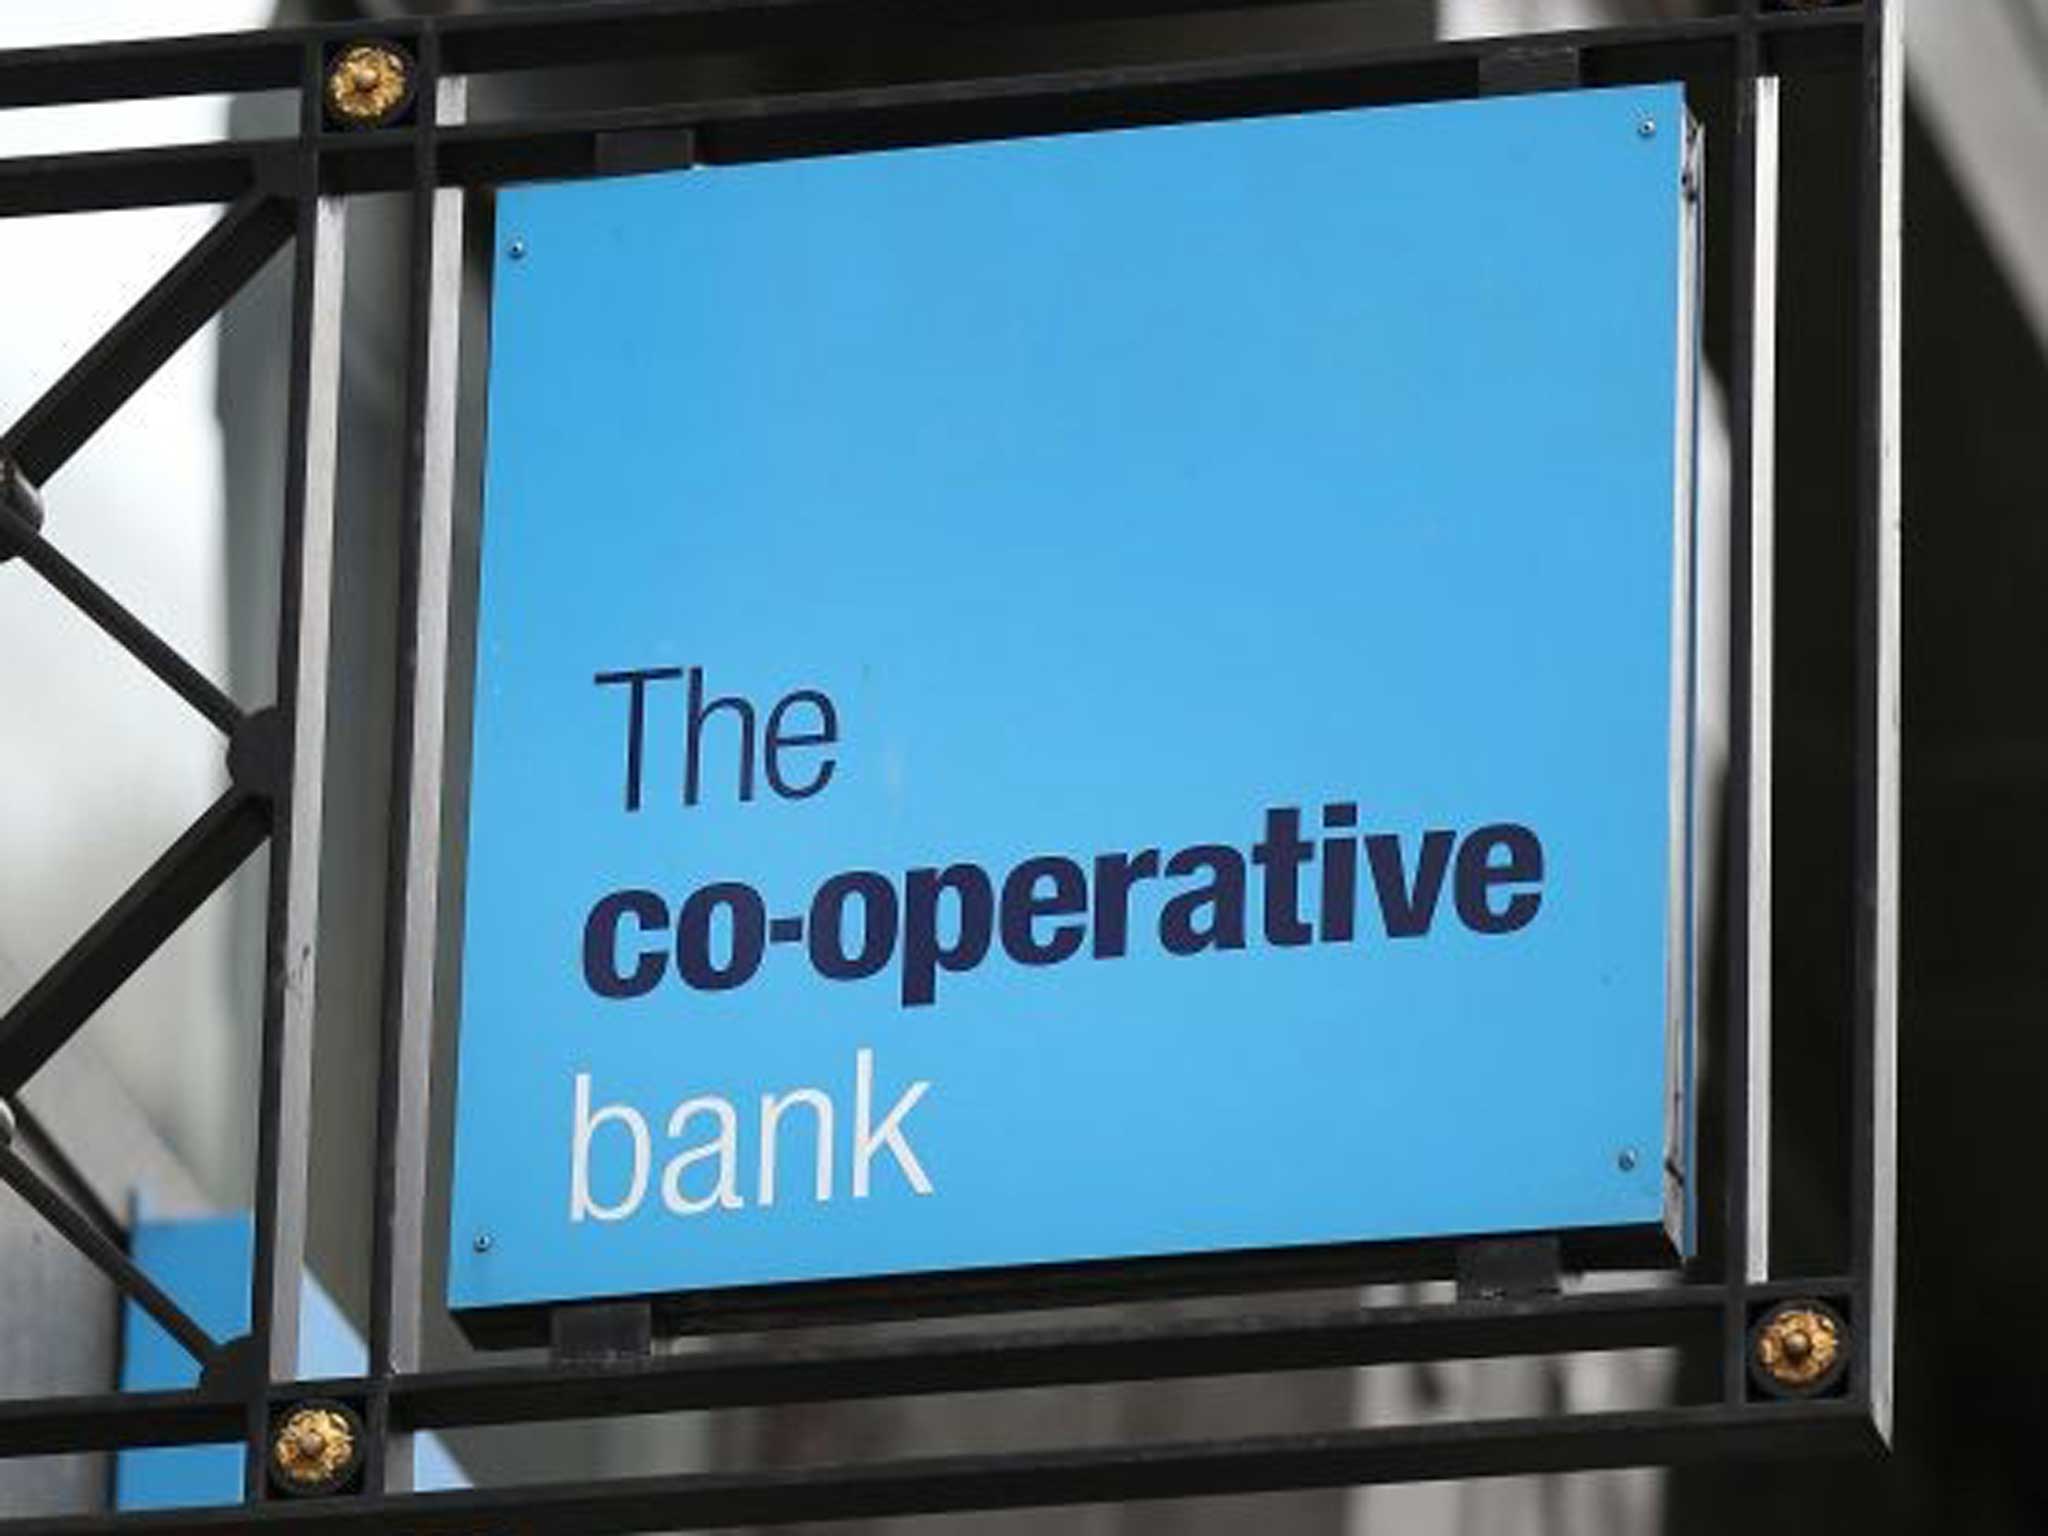 Trustee savings banks had promoted the idea of saving